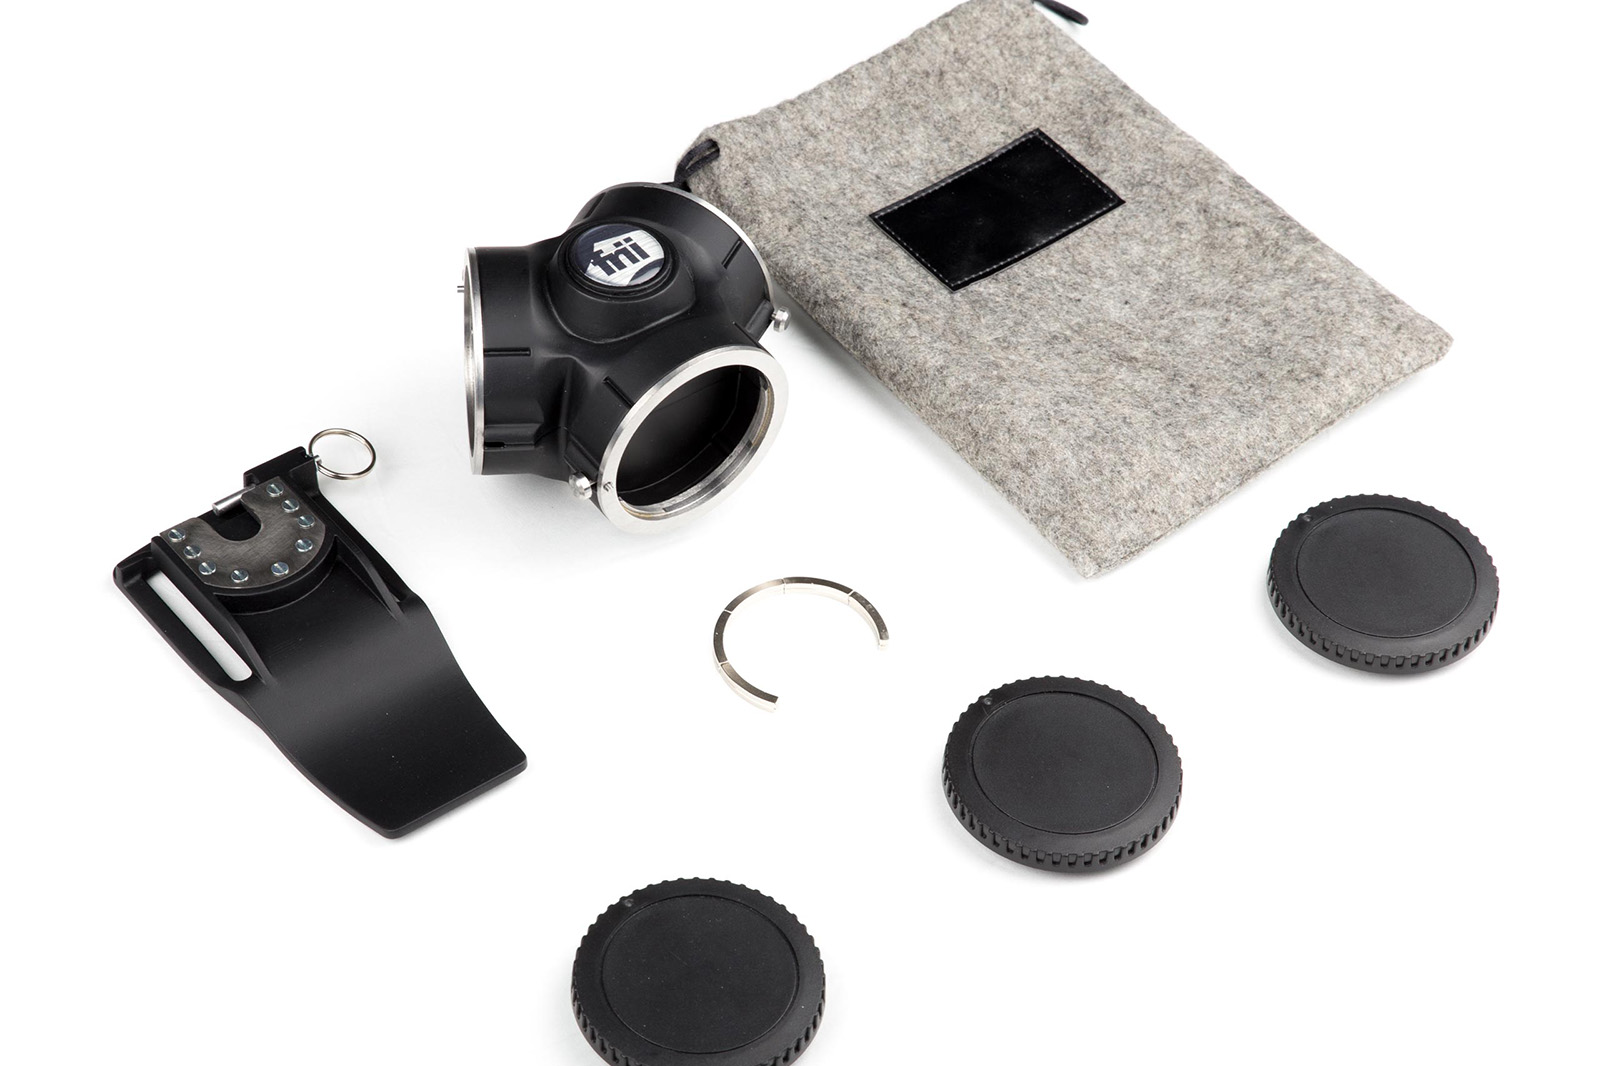 trilens kickstarter lens holster whatsinthebox